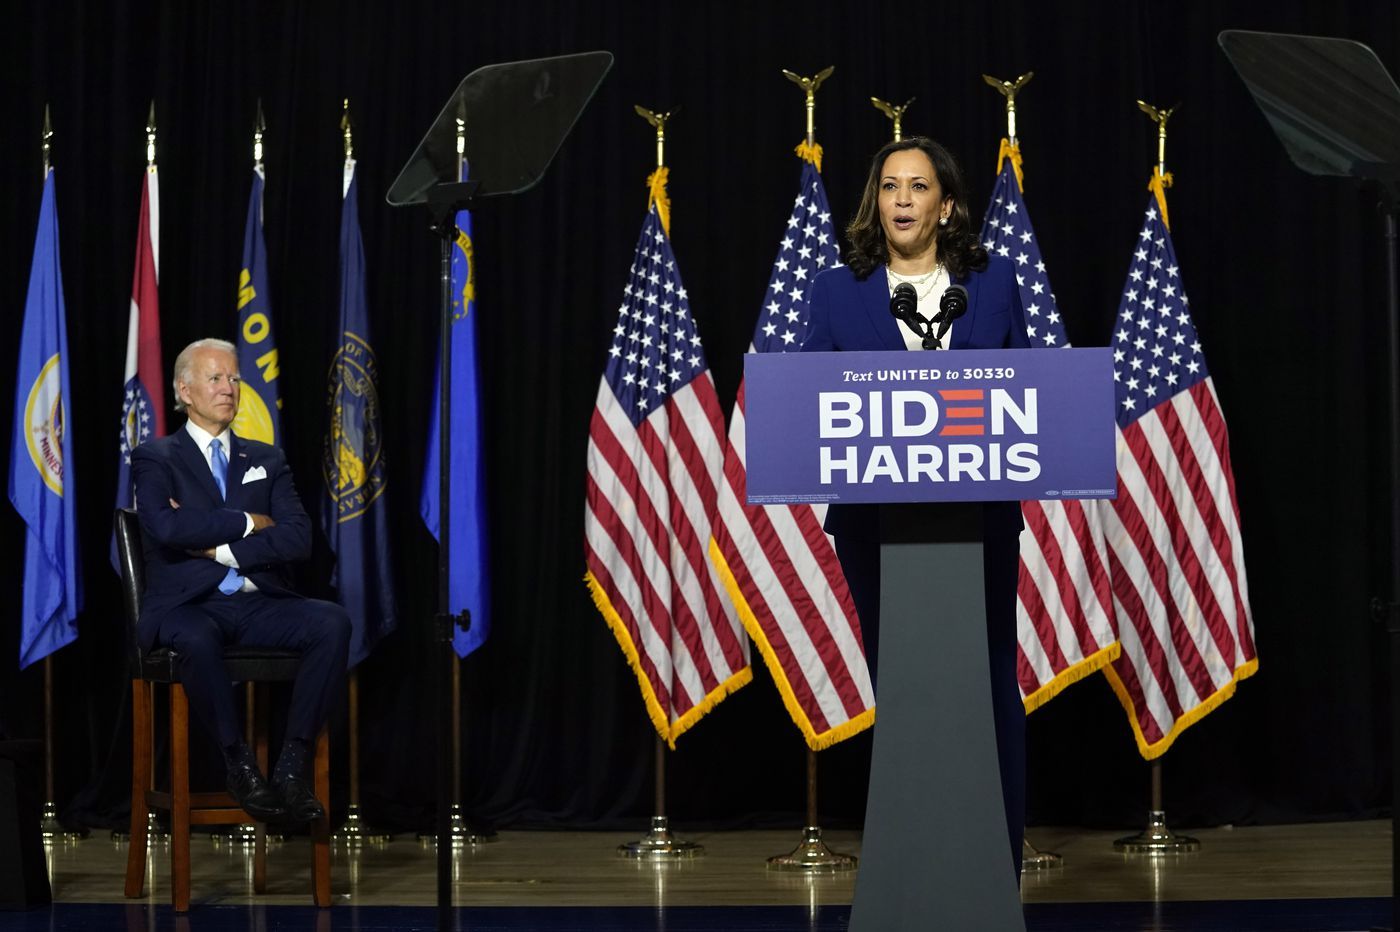 Joe Biden campaigns with VP pick Kamala Harris in Wilmington, Delaware